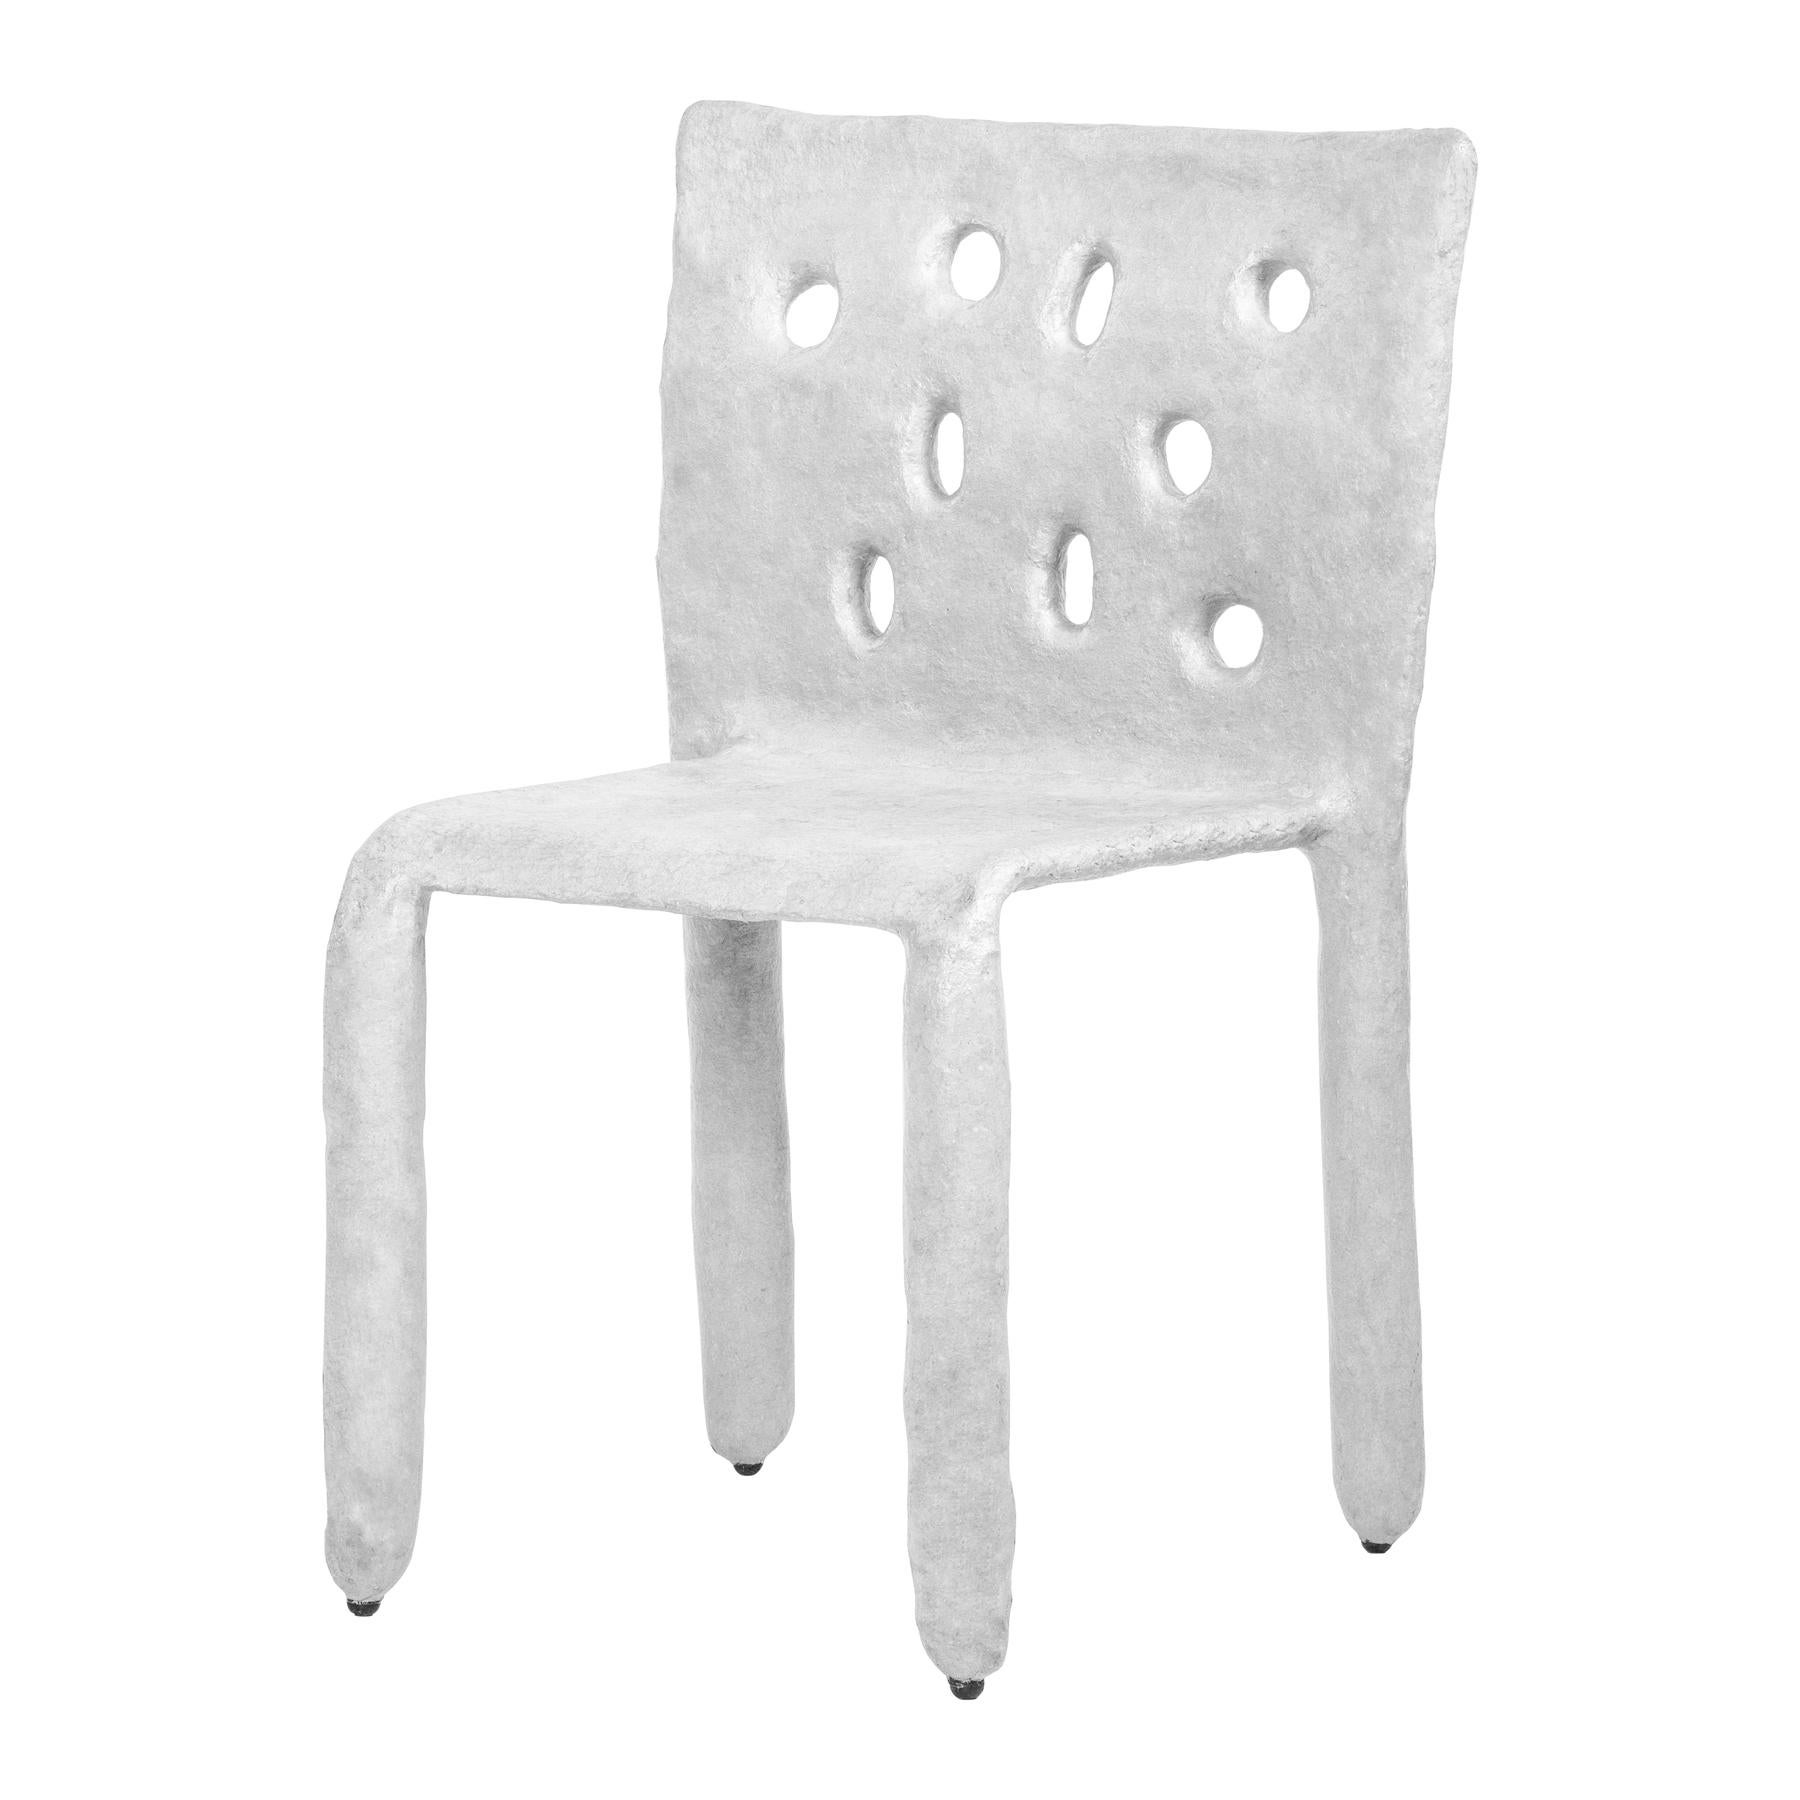 White Sculpted Contemporary Chair by FAINA